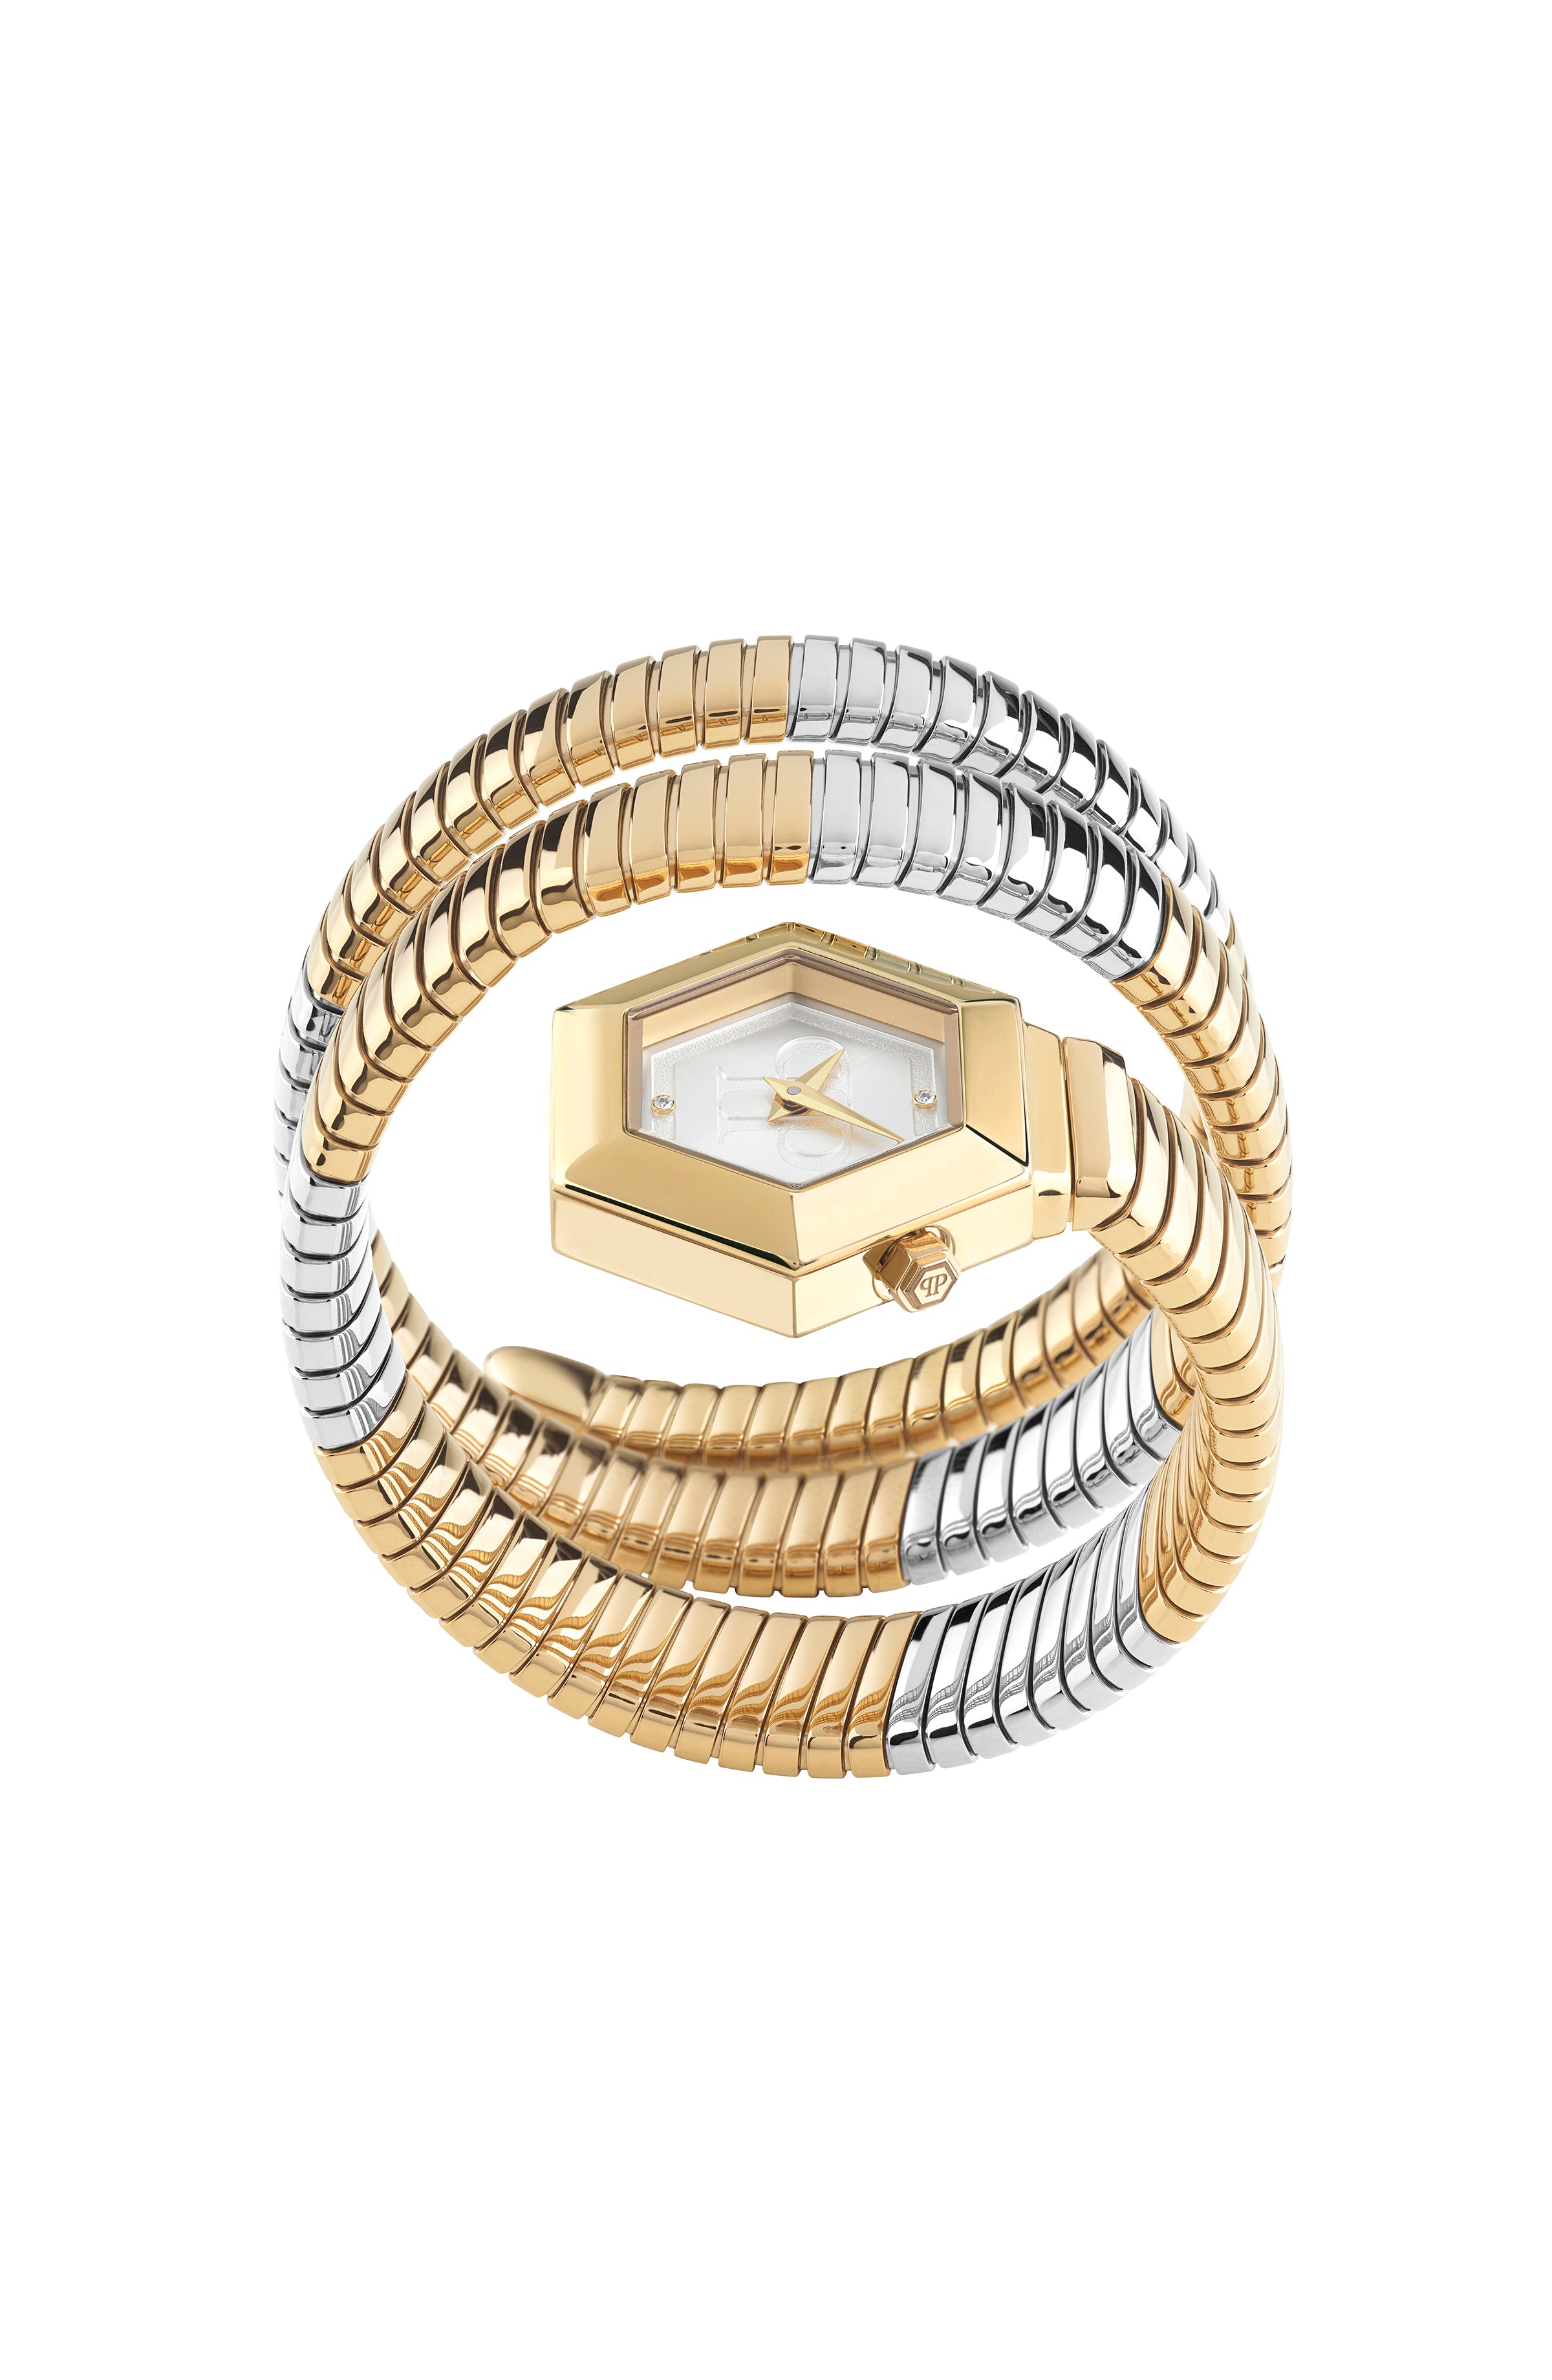 $nake Hexagon Bracelet Watch